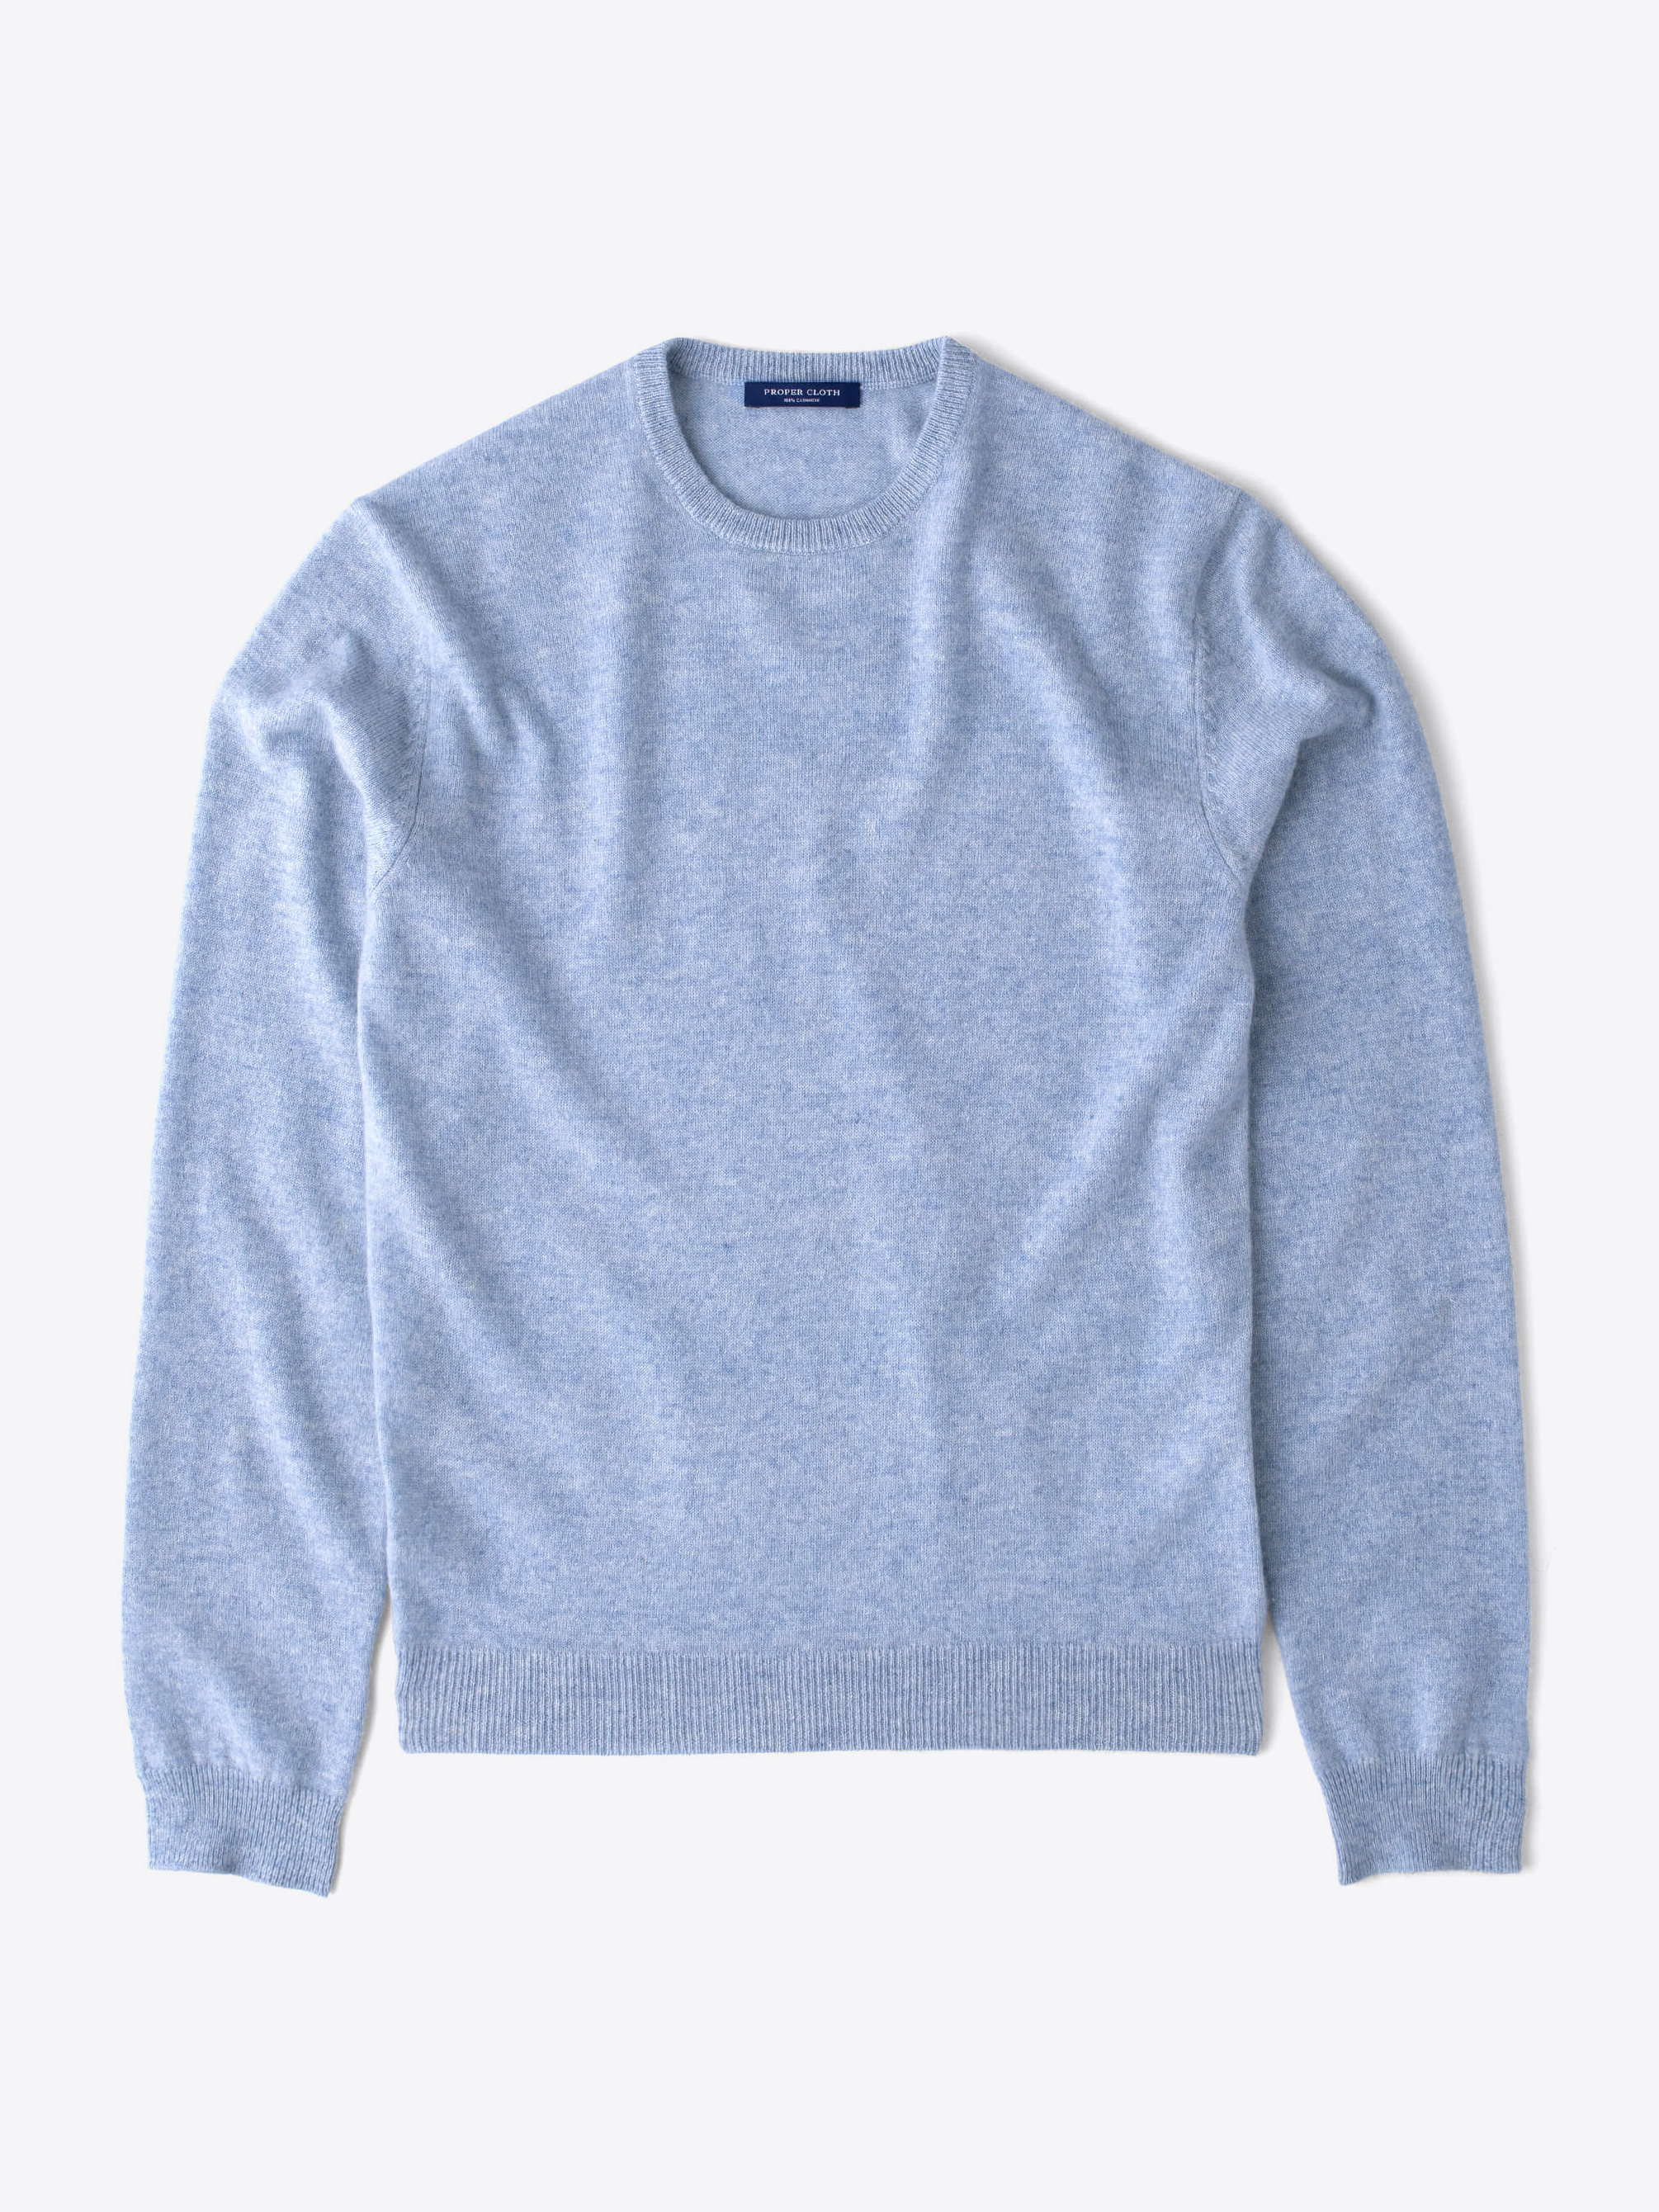 Zoom Image of Light Blue Cashmere Crewneck Sweater